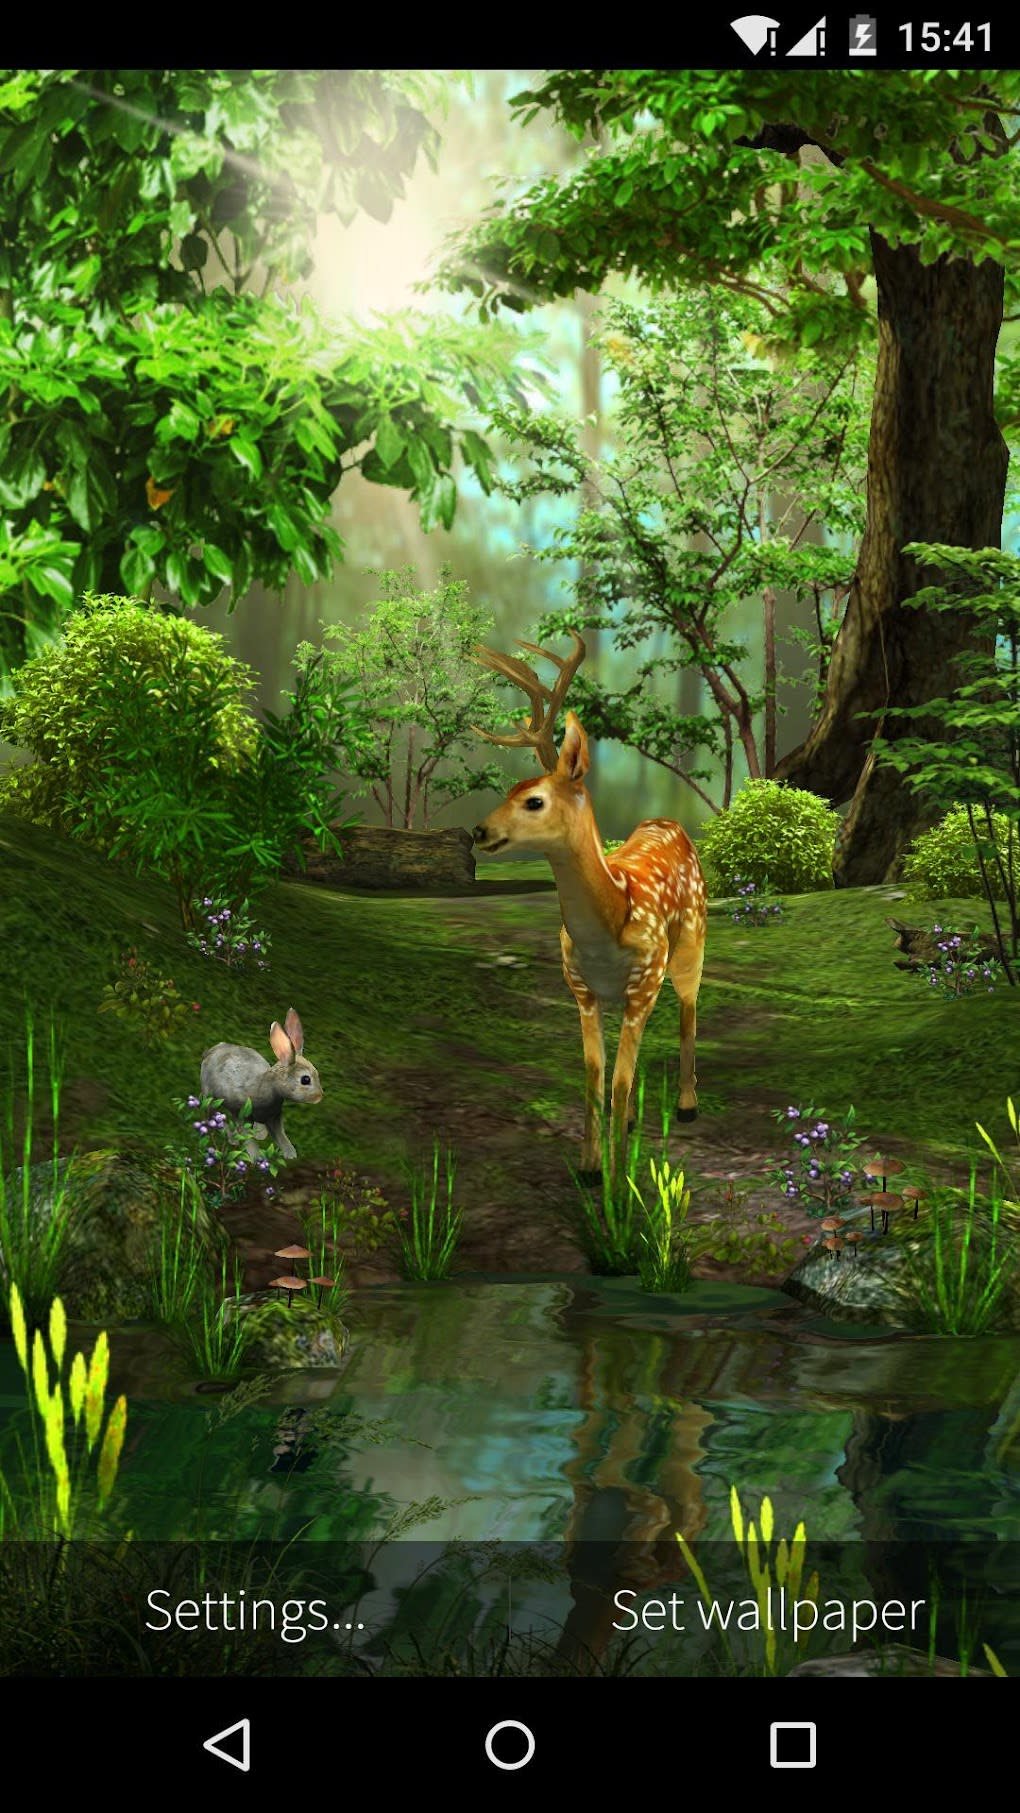 3D Deer-Nature Live Wallpaper APK for Android - Download